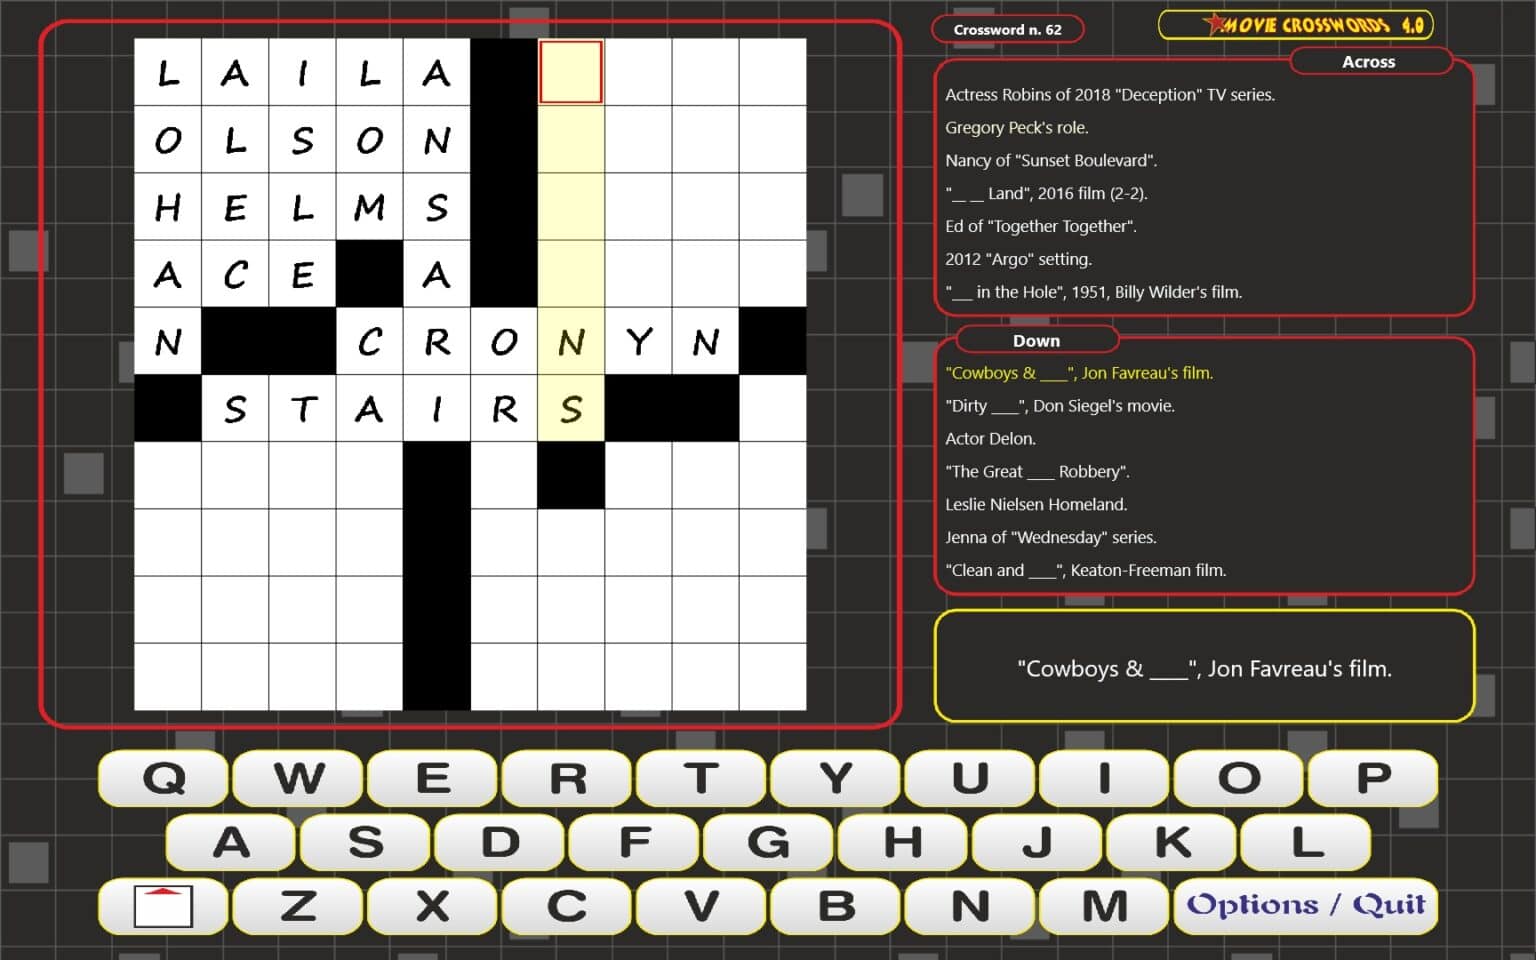 Movie Crosswords game on iPad (screenshot)